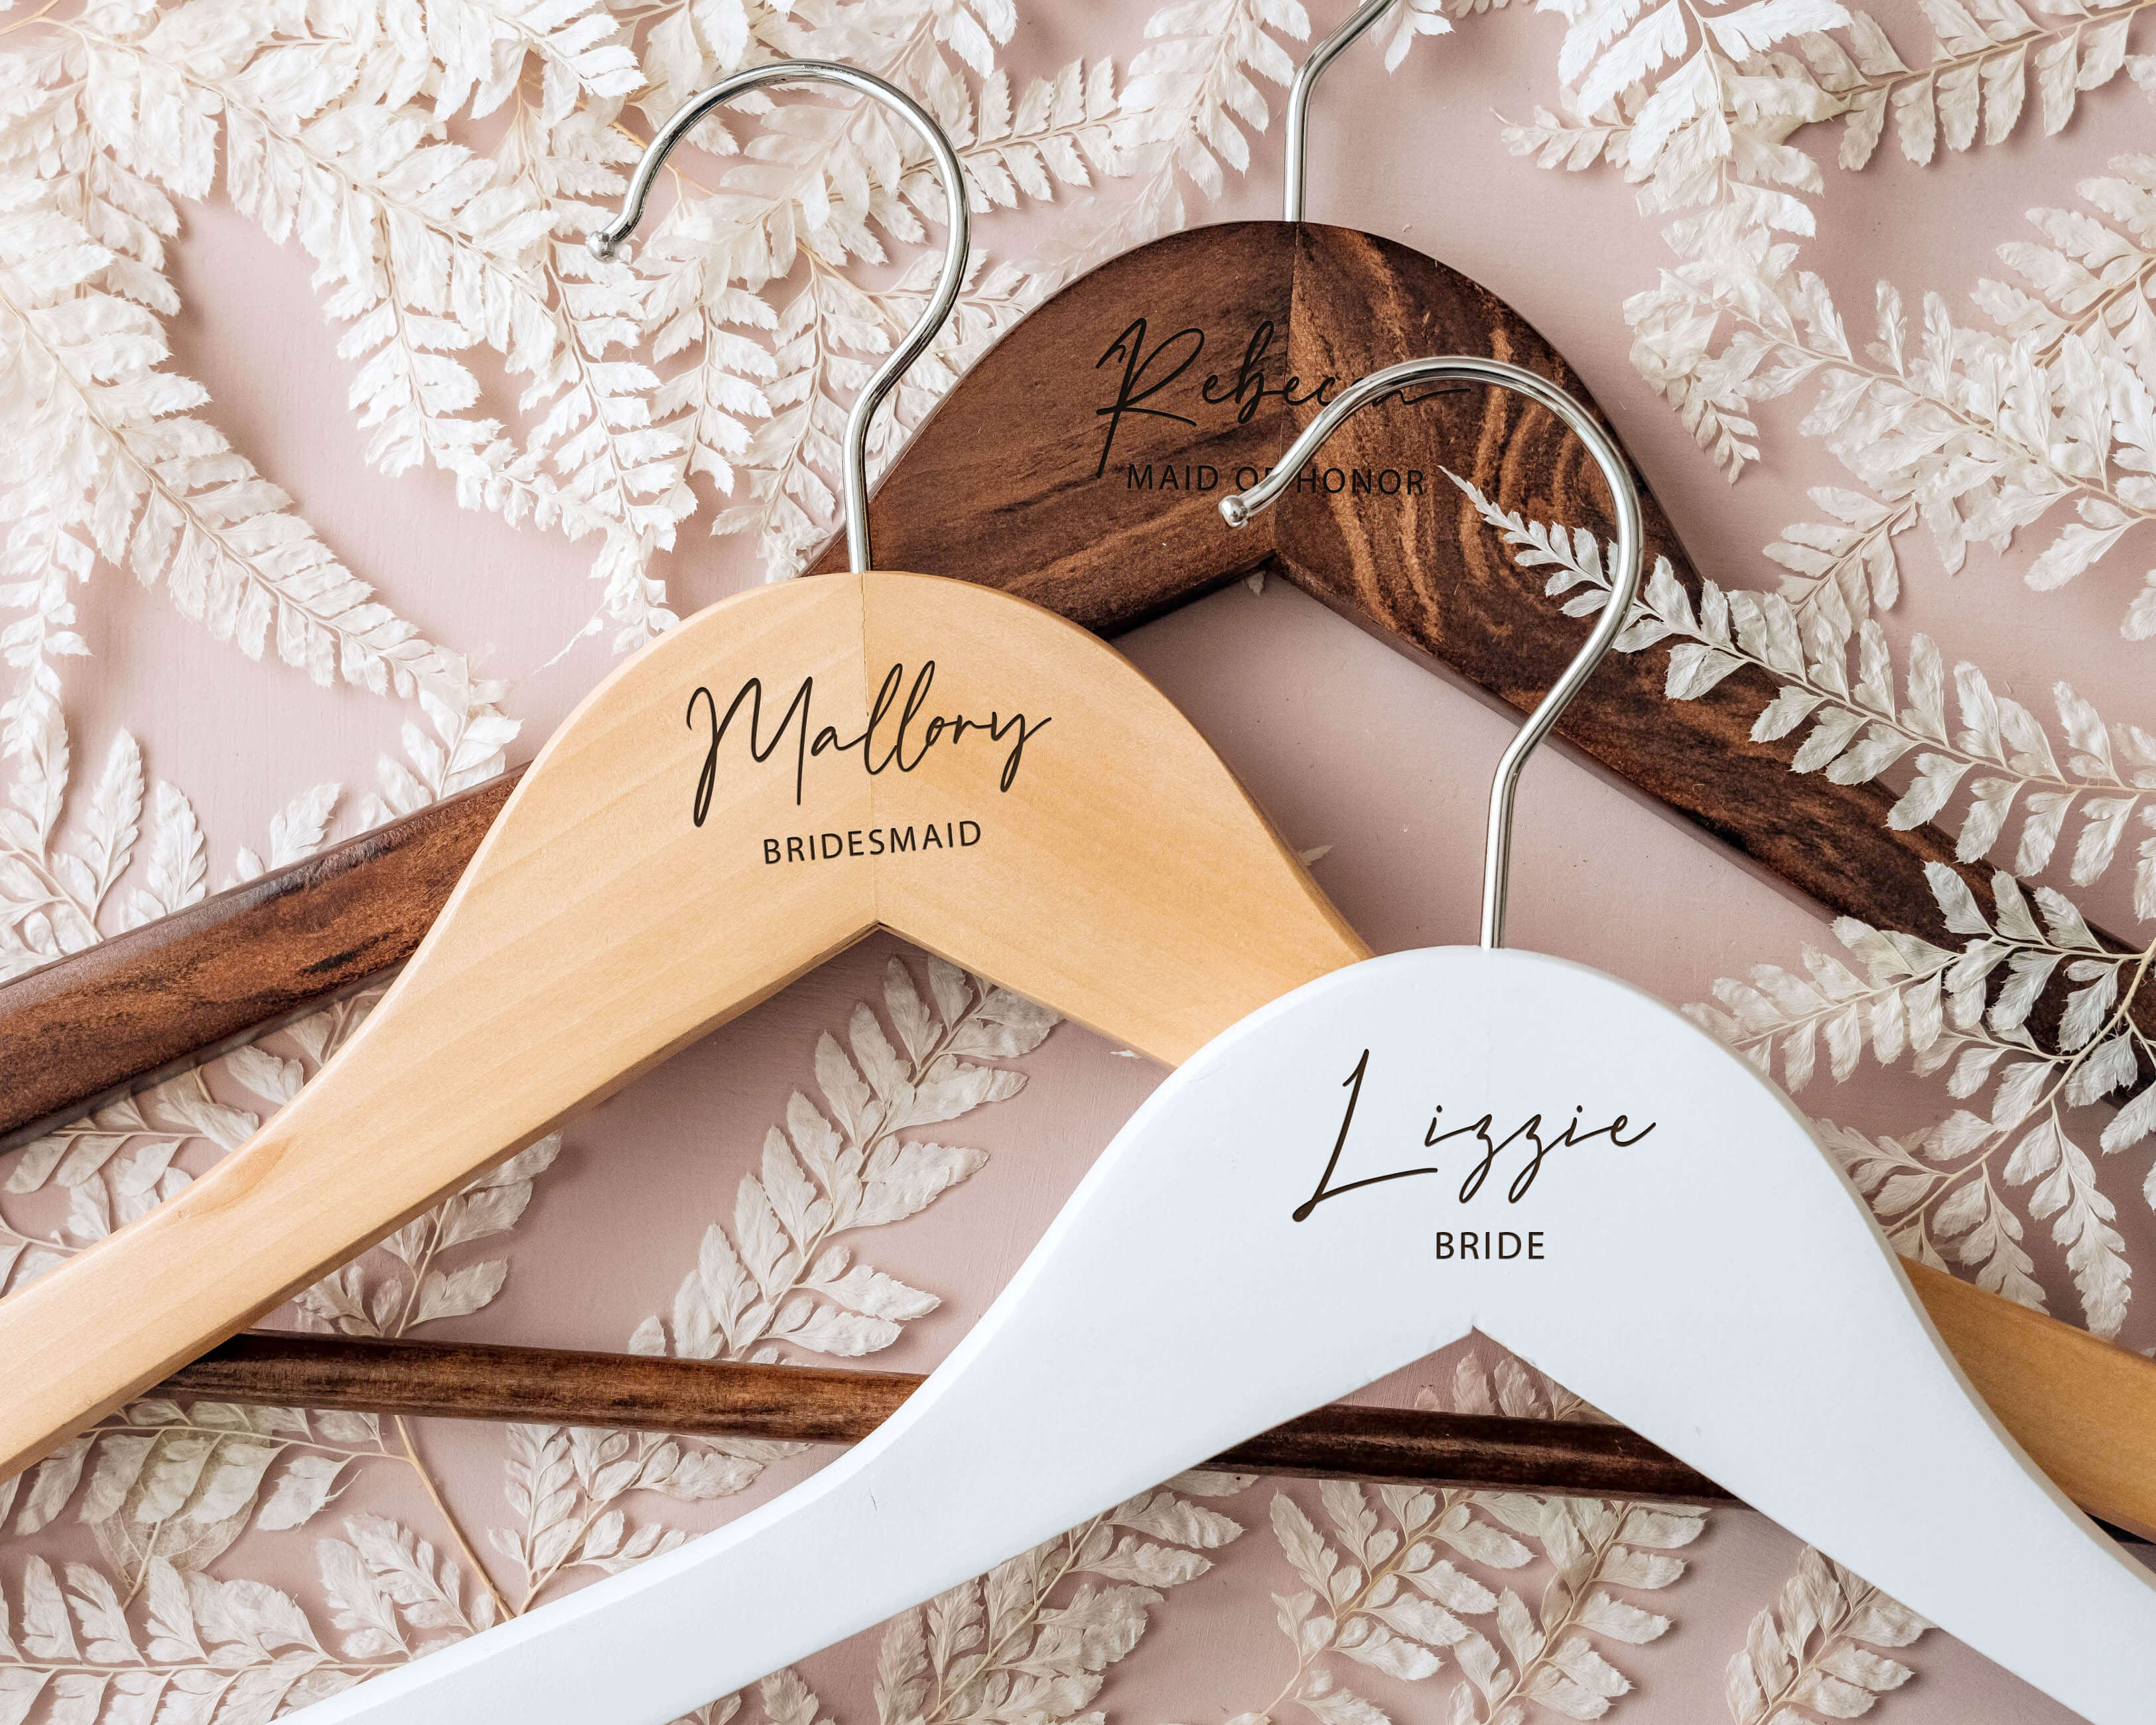 Bride Hanger - Light Wood, Walnut, White Personalized Wooden Hangers, engraved with name and wedding role.